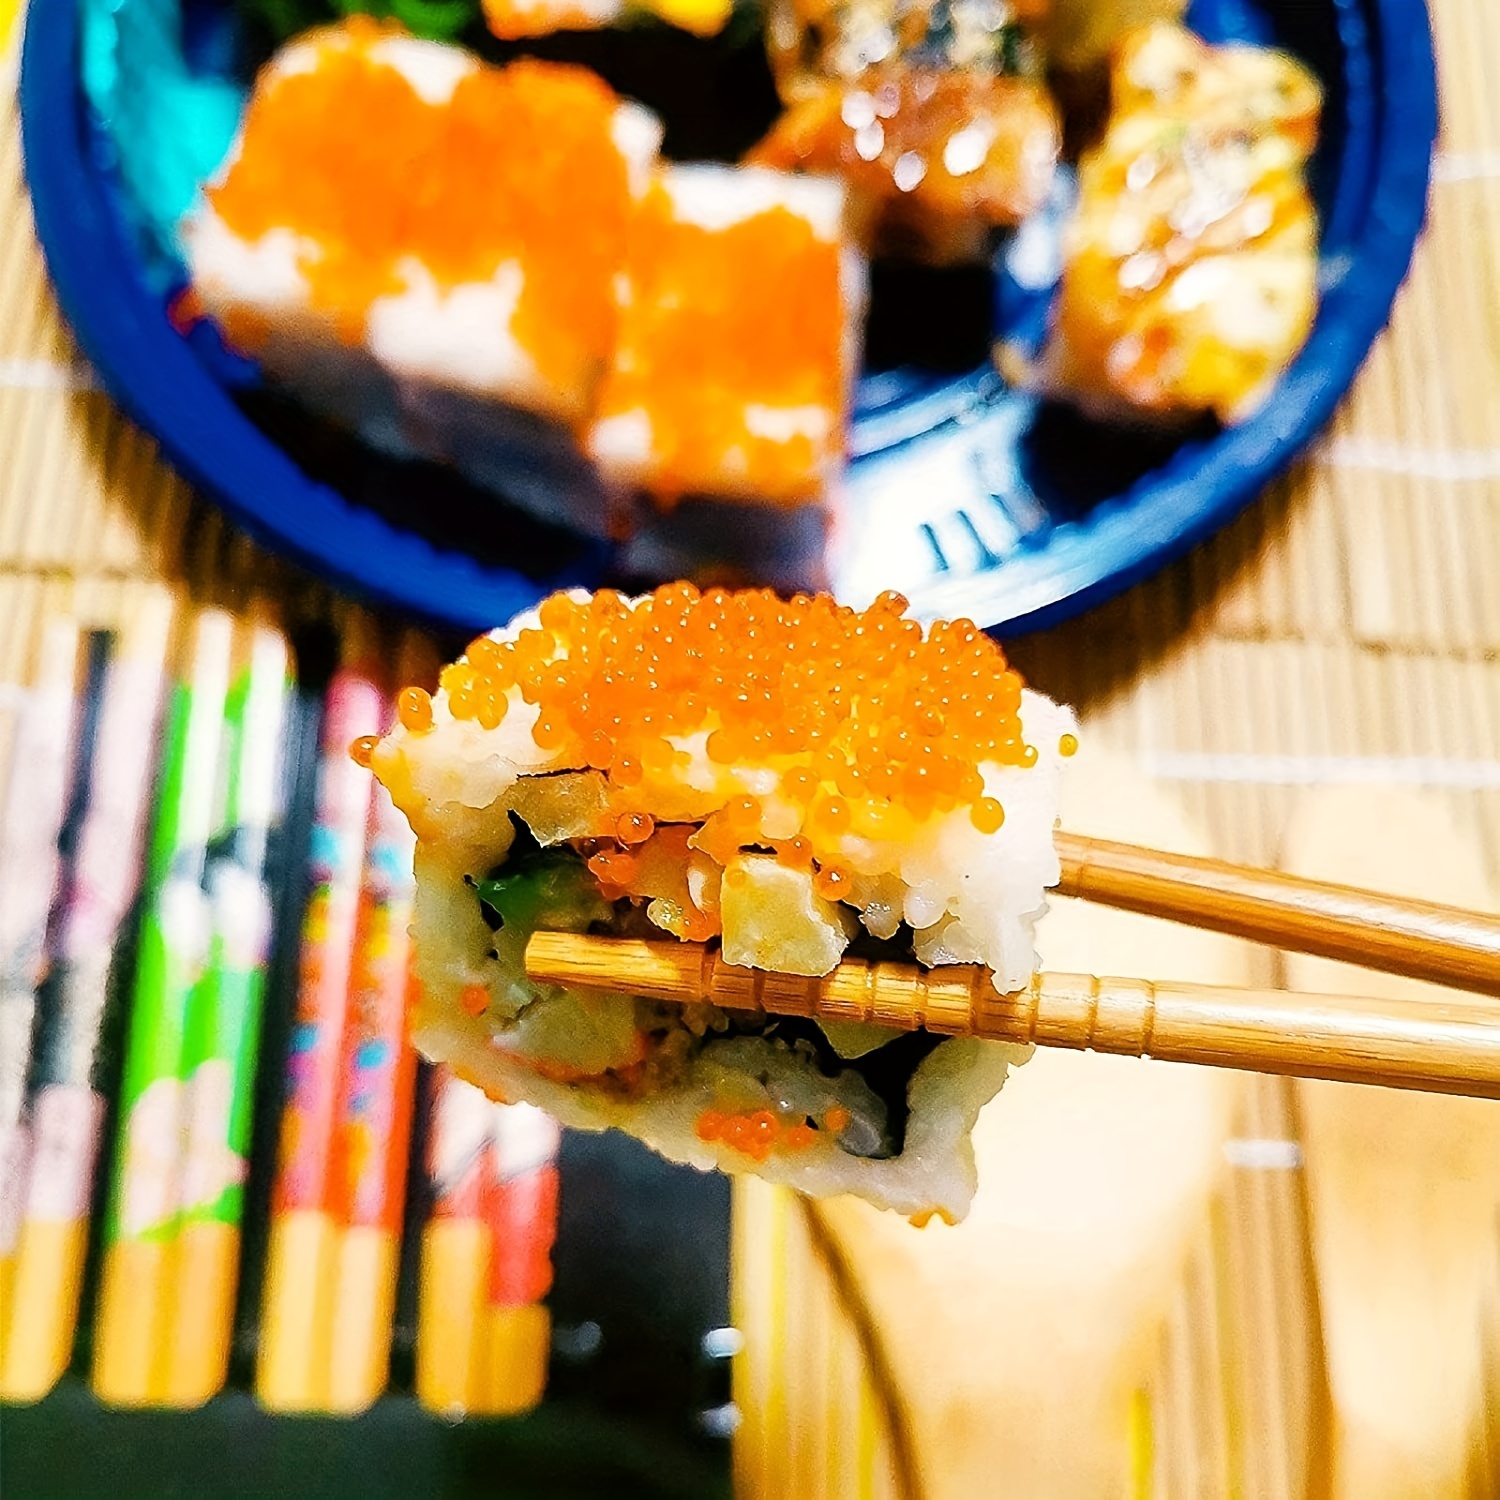 12pcs Sushi Set, Sushi Mat Bamboo, Sushi Making Kit, With 2 Sushi Roller  Mats 5 Chopsticks 1 Paddle 1 Spreader 2 Sauce Dish And 1 Chopsticks Bag